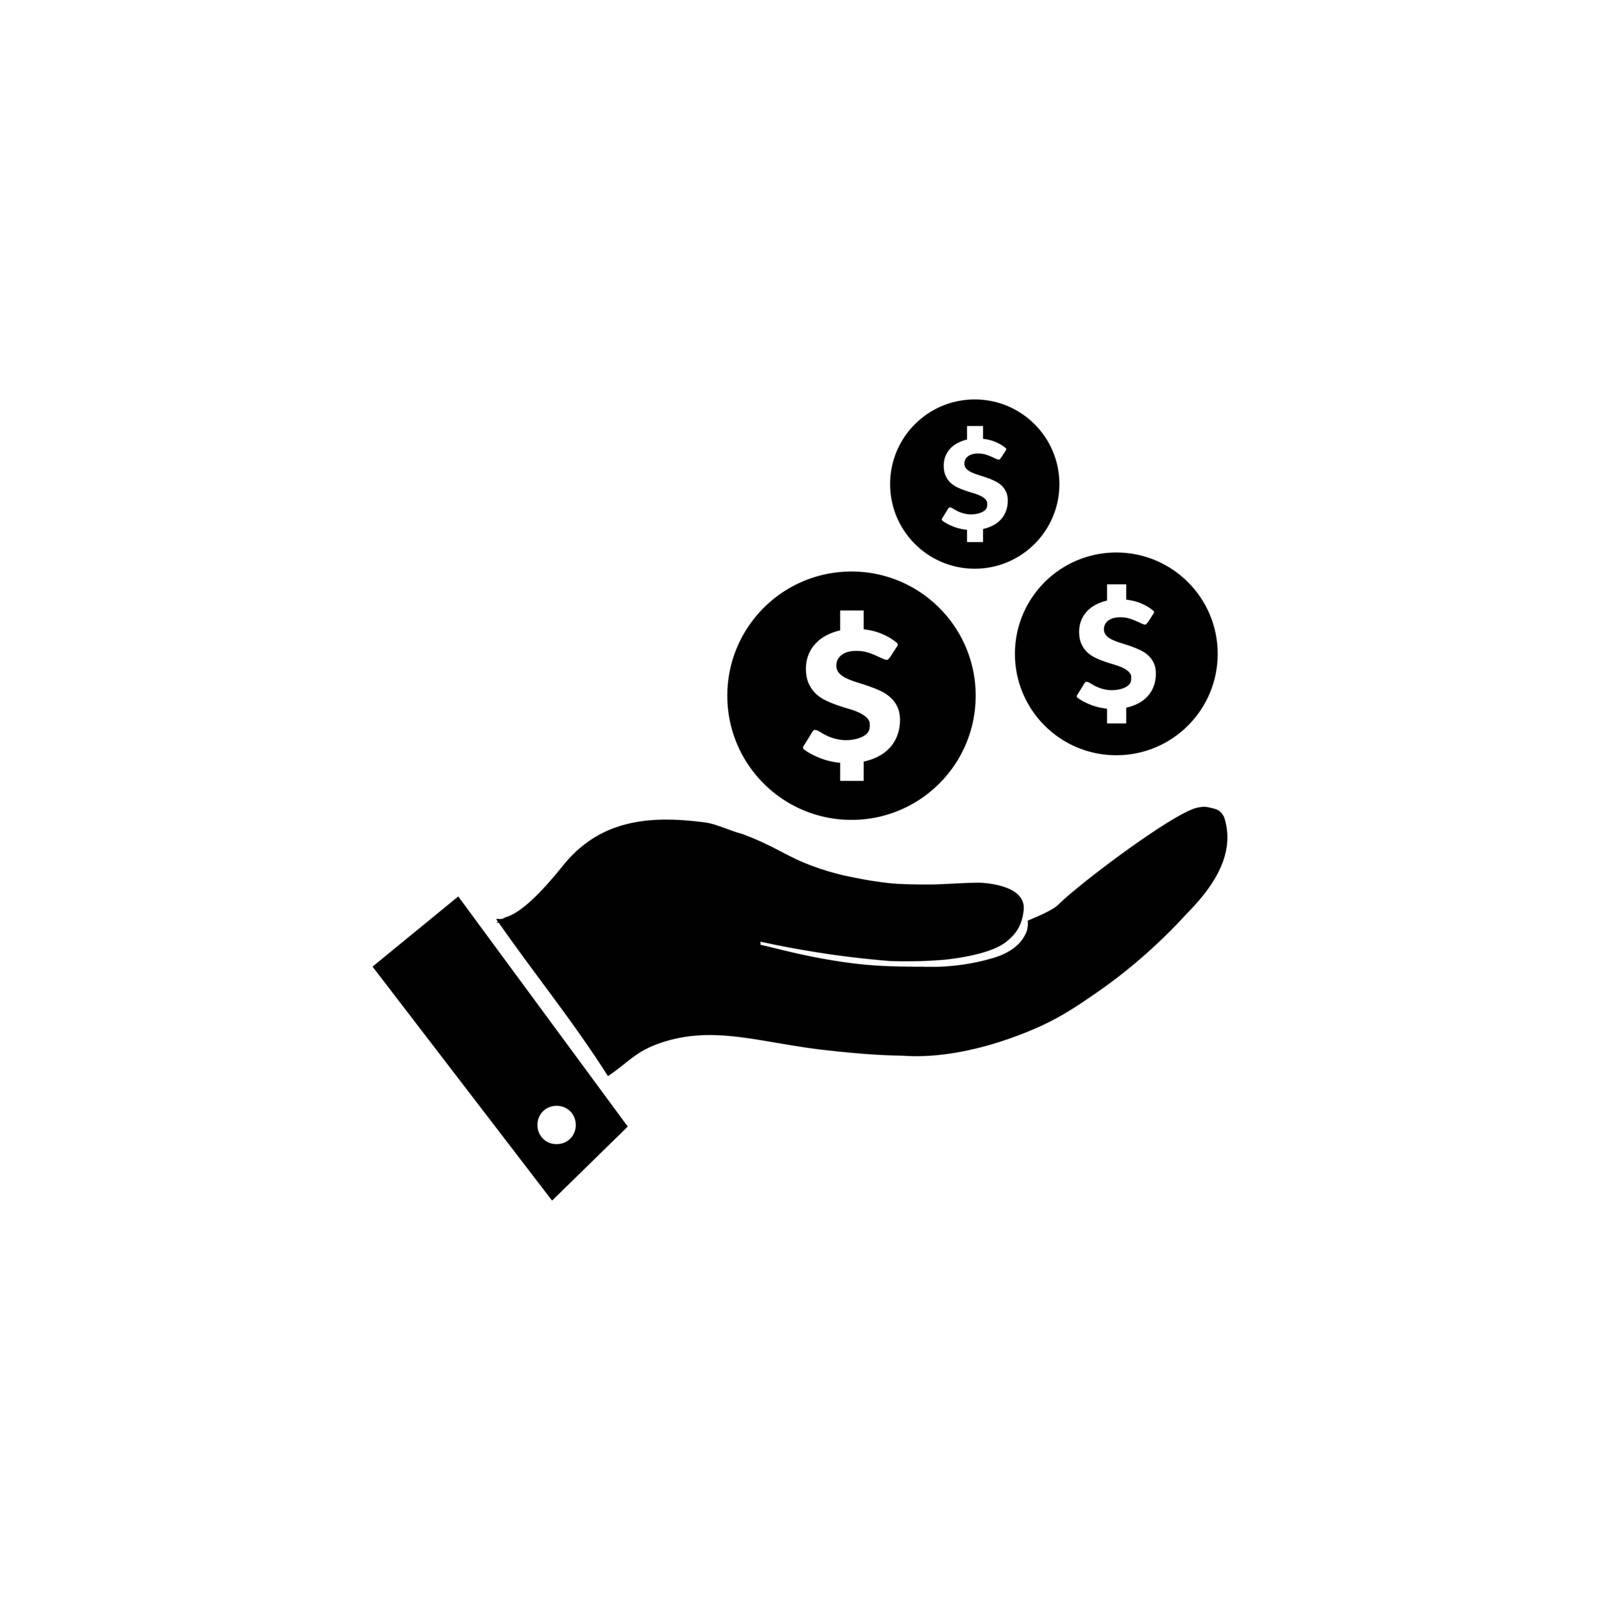 Earn money icon. Money in hand symbol. by veronawinner